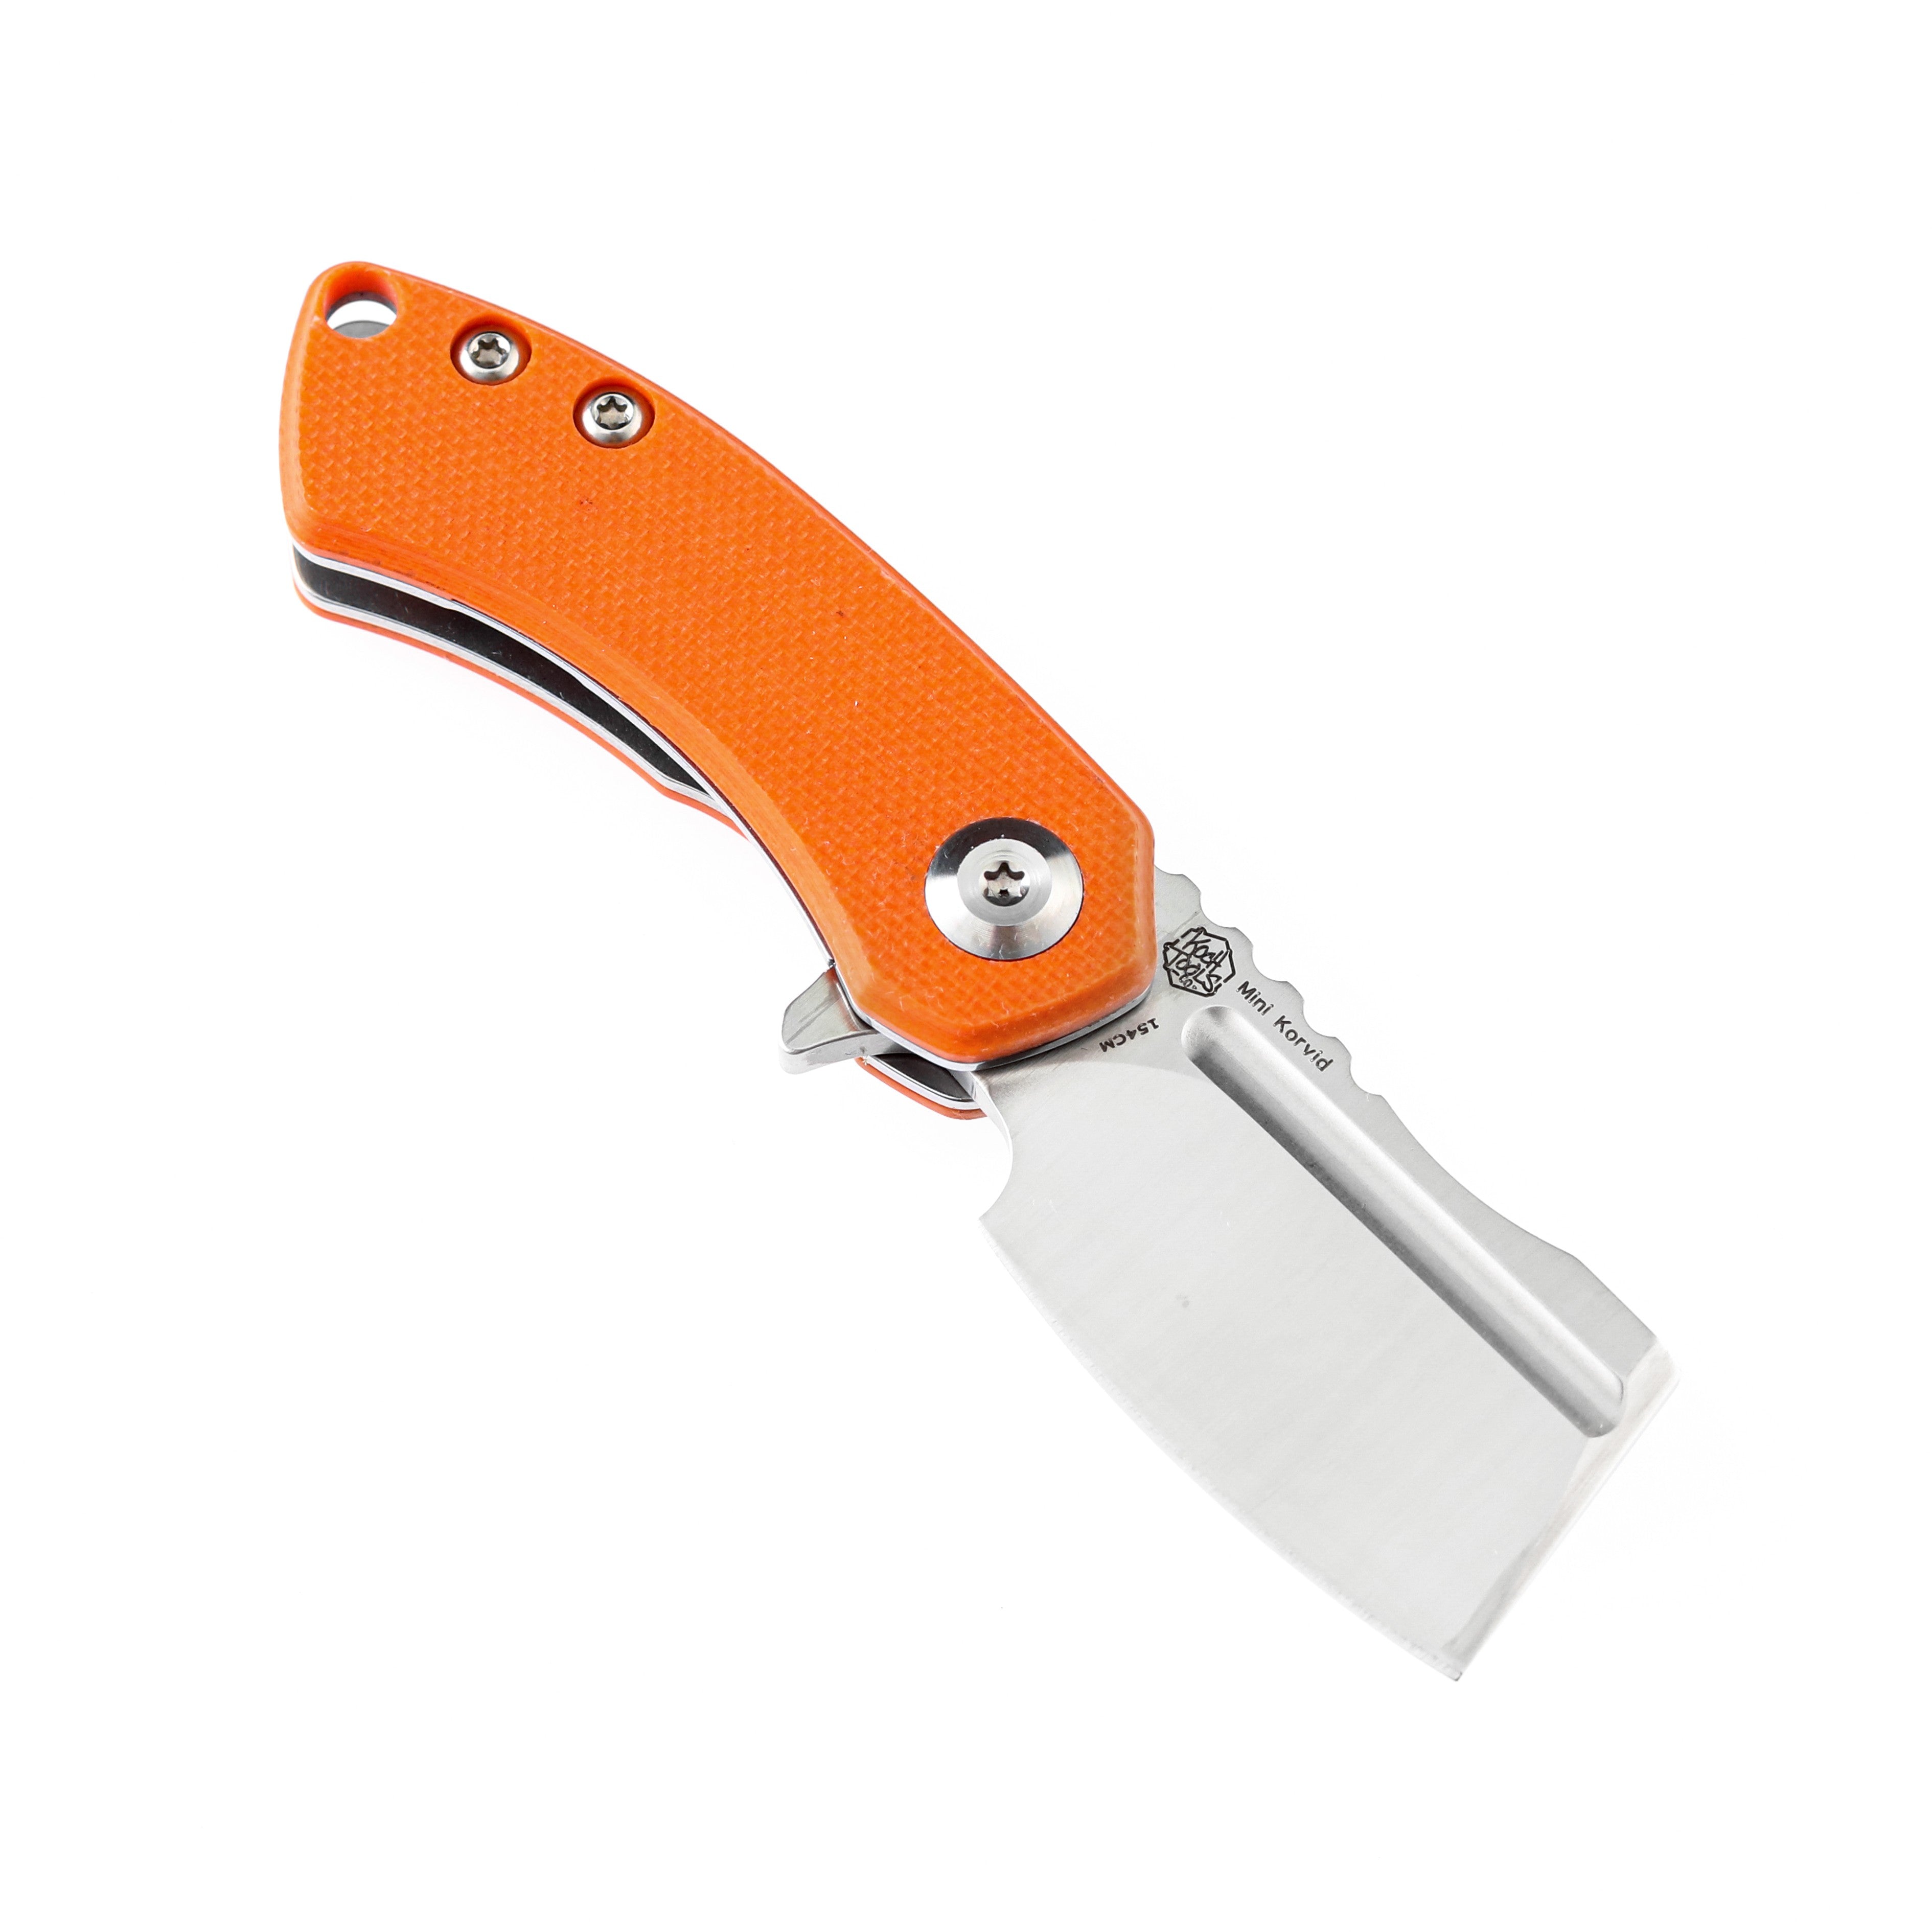 Kansept Knives T3030A6 Mini Korvid 154CM Blade Orange G10 Handle Liner Lock Edc Knives